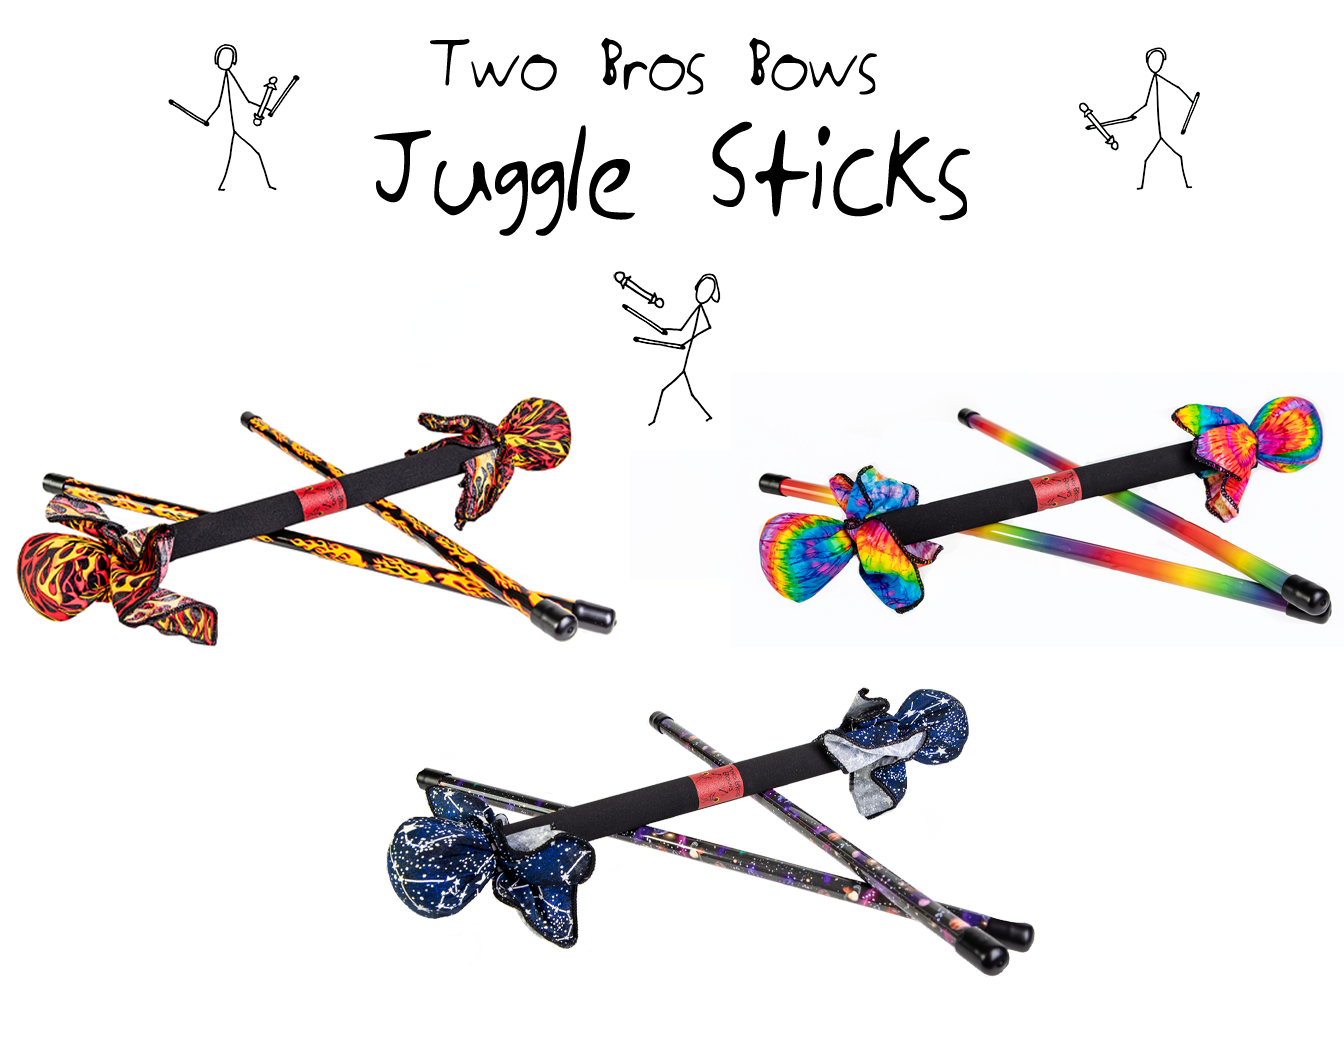 Two Bros Bows - Juggle Sticks